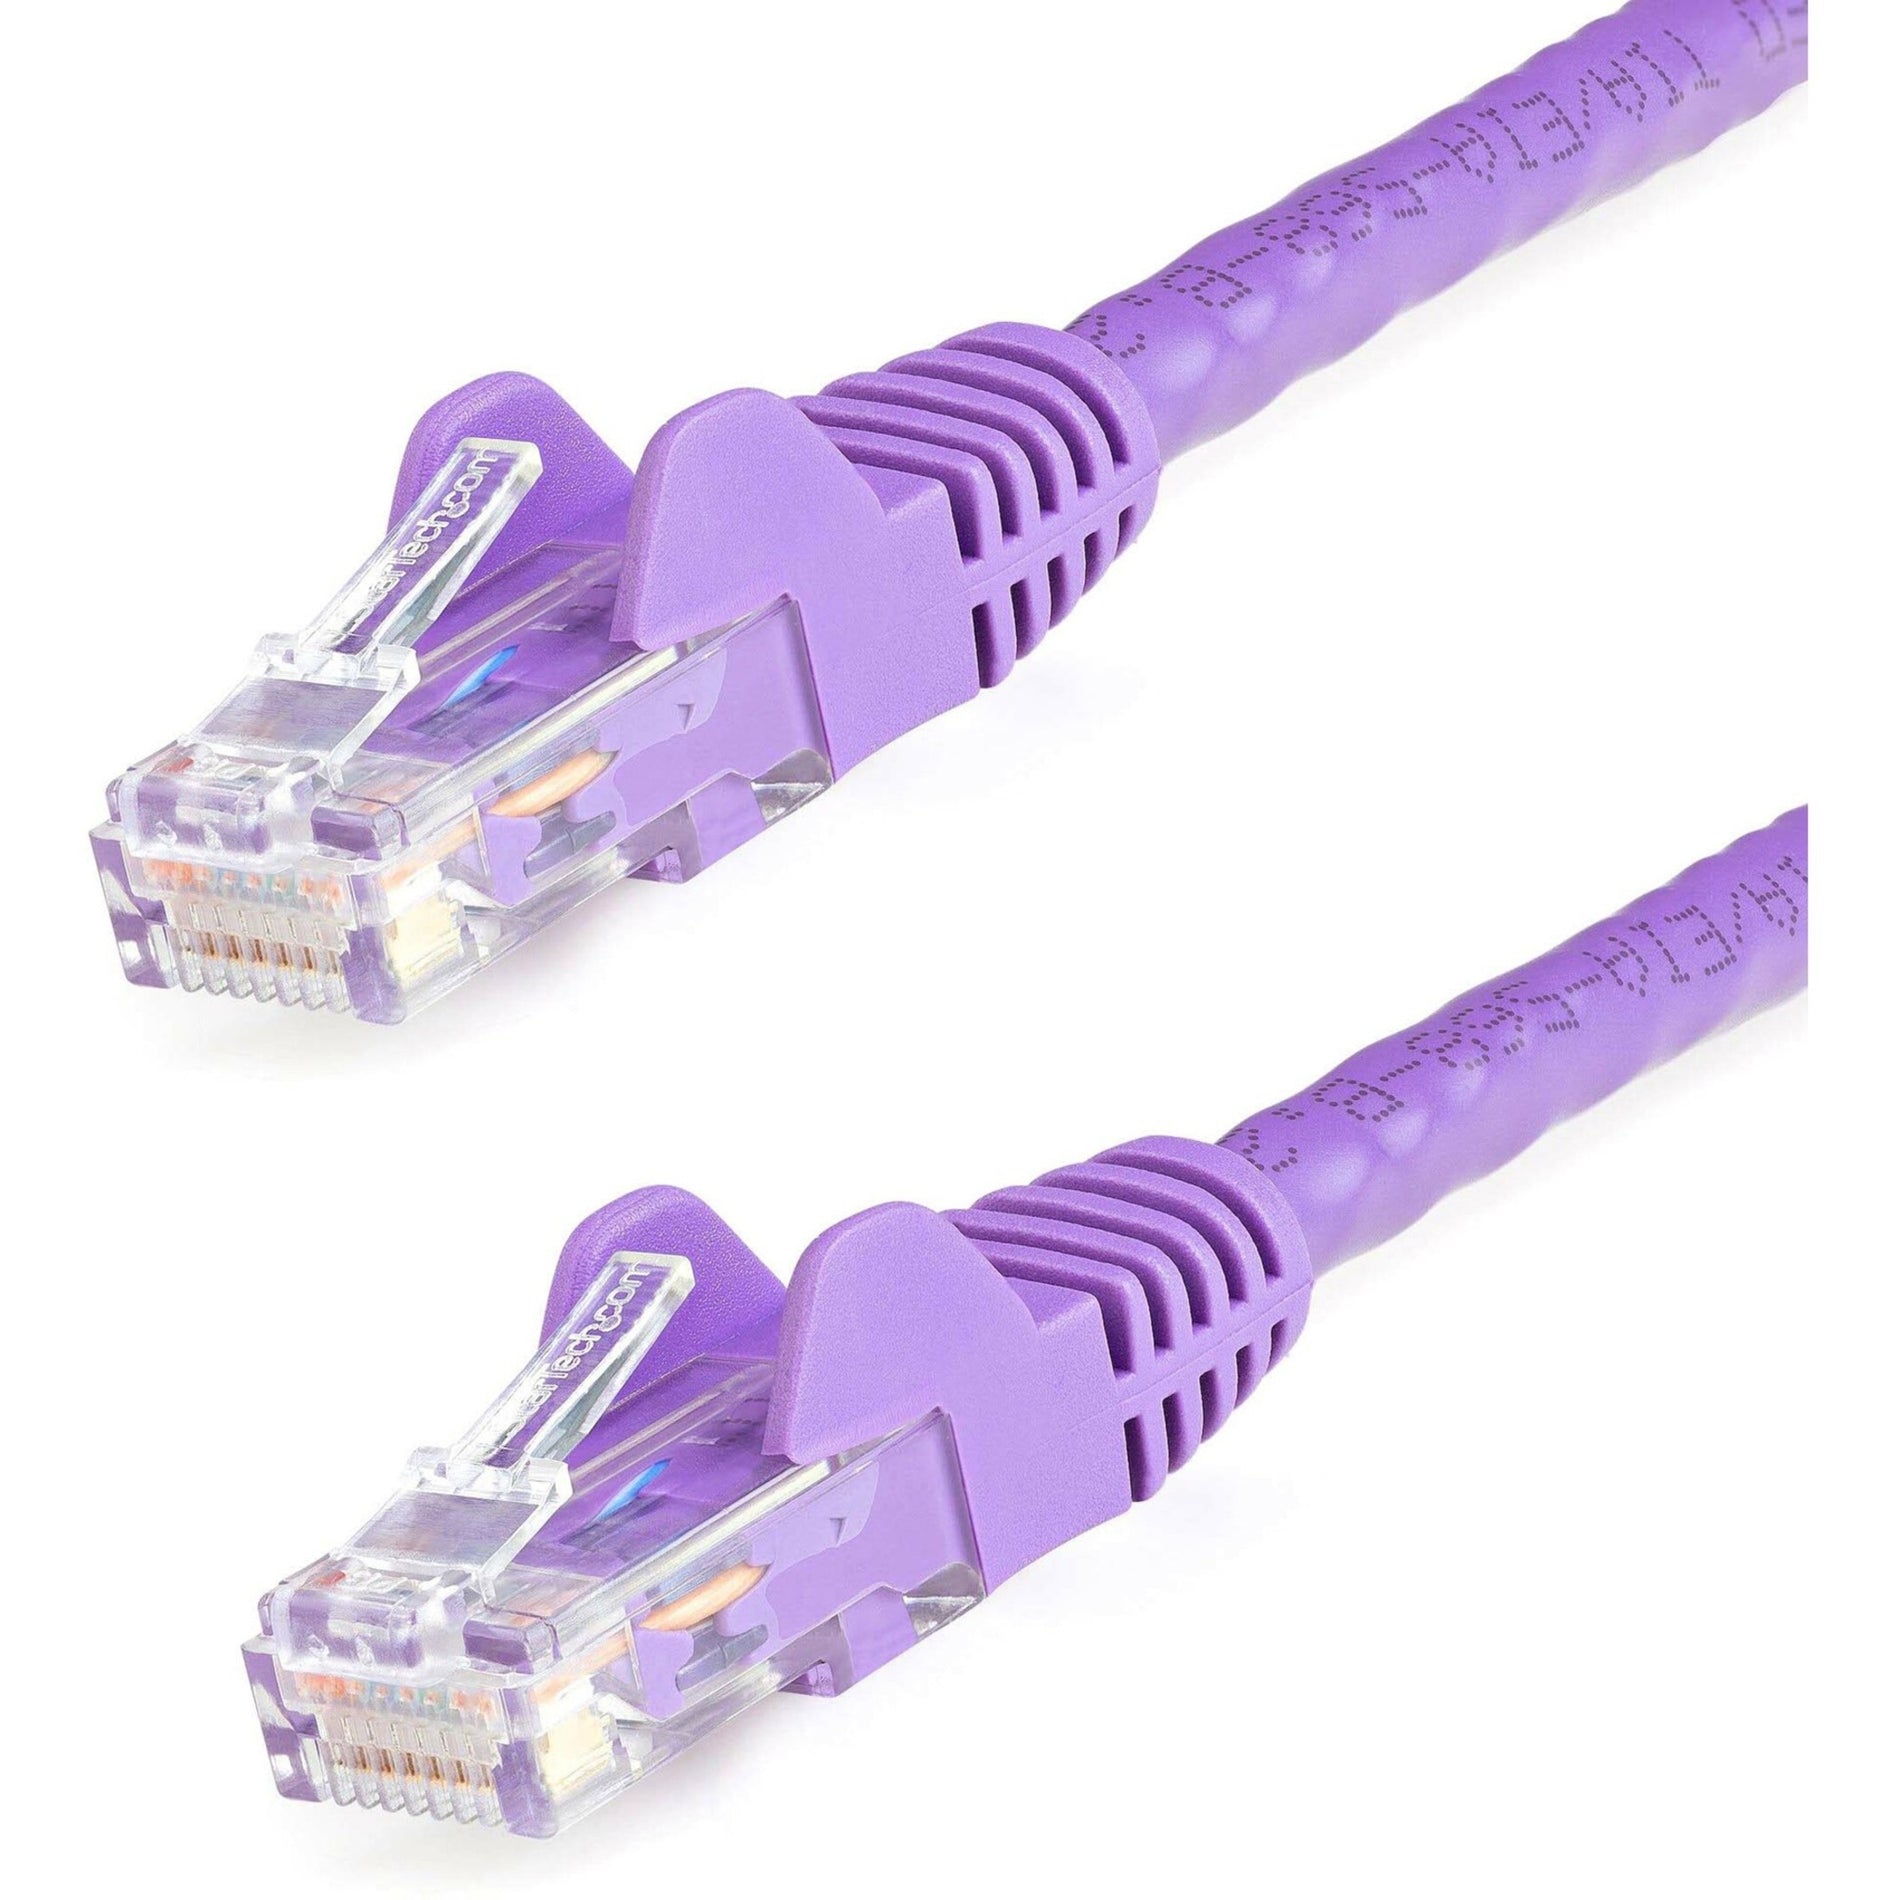 StarTech.com N6PATCH8PL Cat6 Patch Cable, 8 ft Purple Ethernet Cable with Snagless RJ45 Connectors